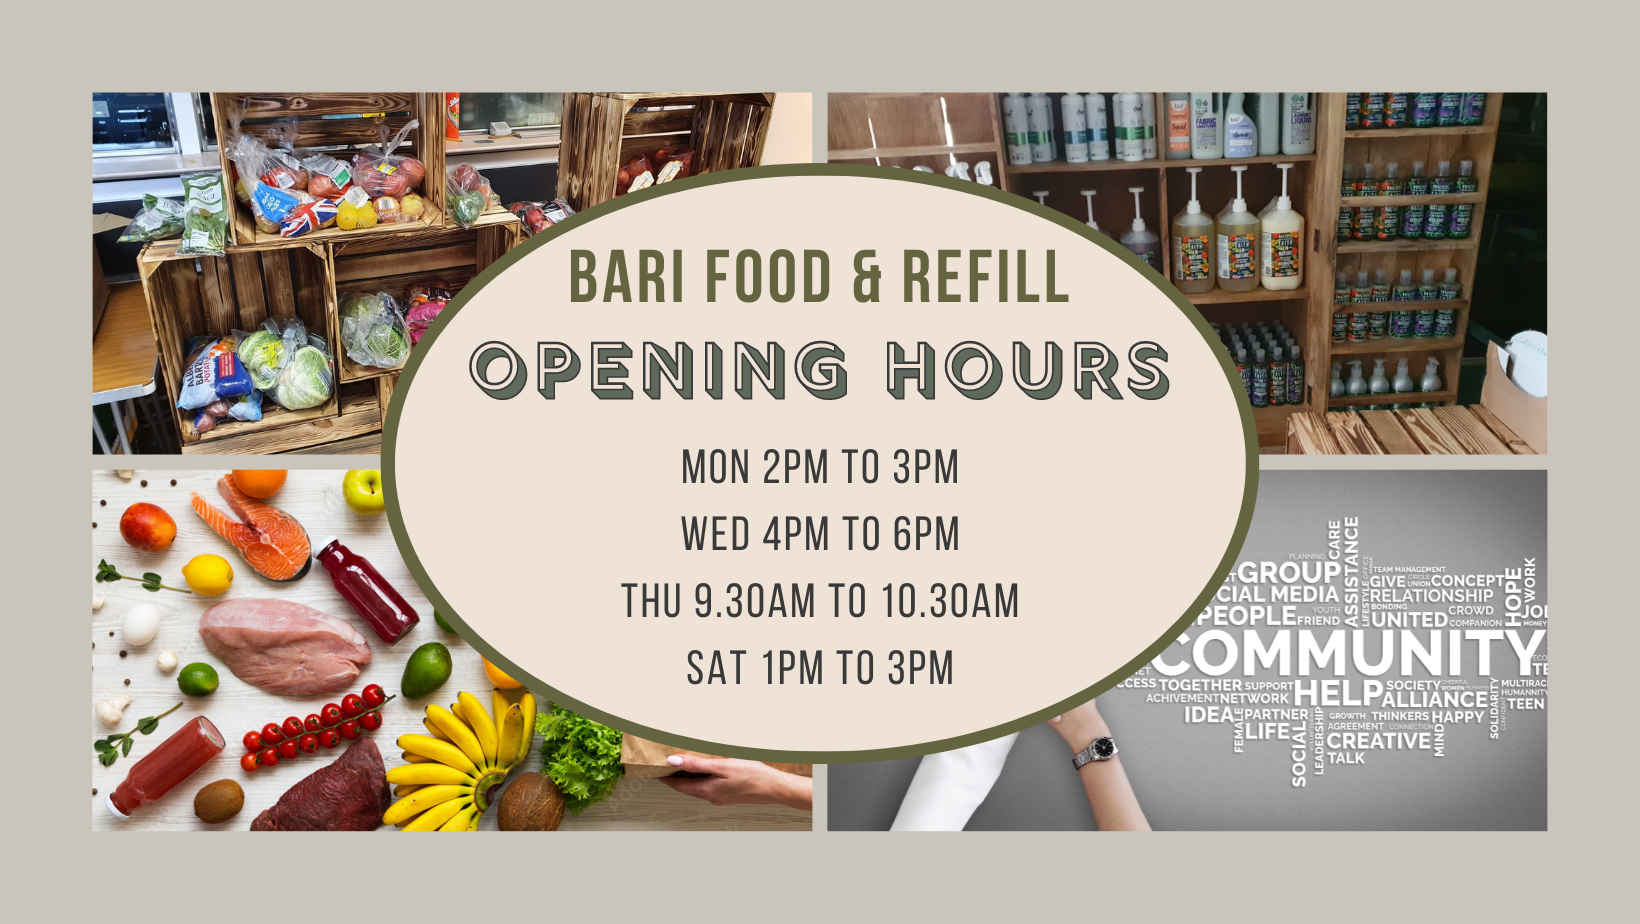 BaRI Food Store & Refill